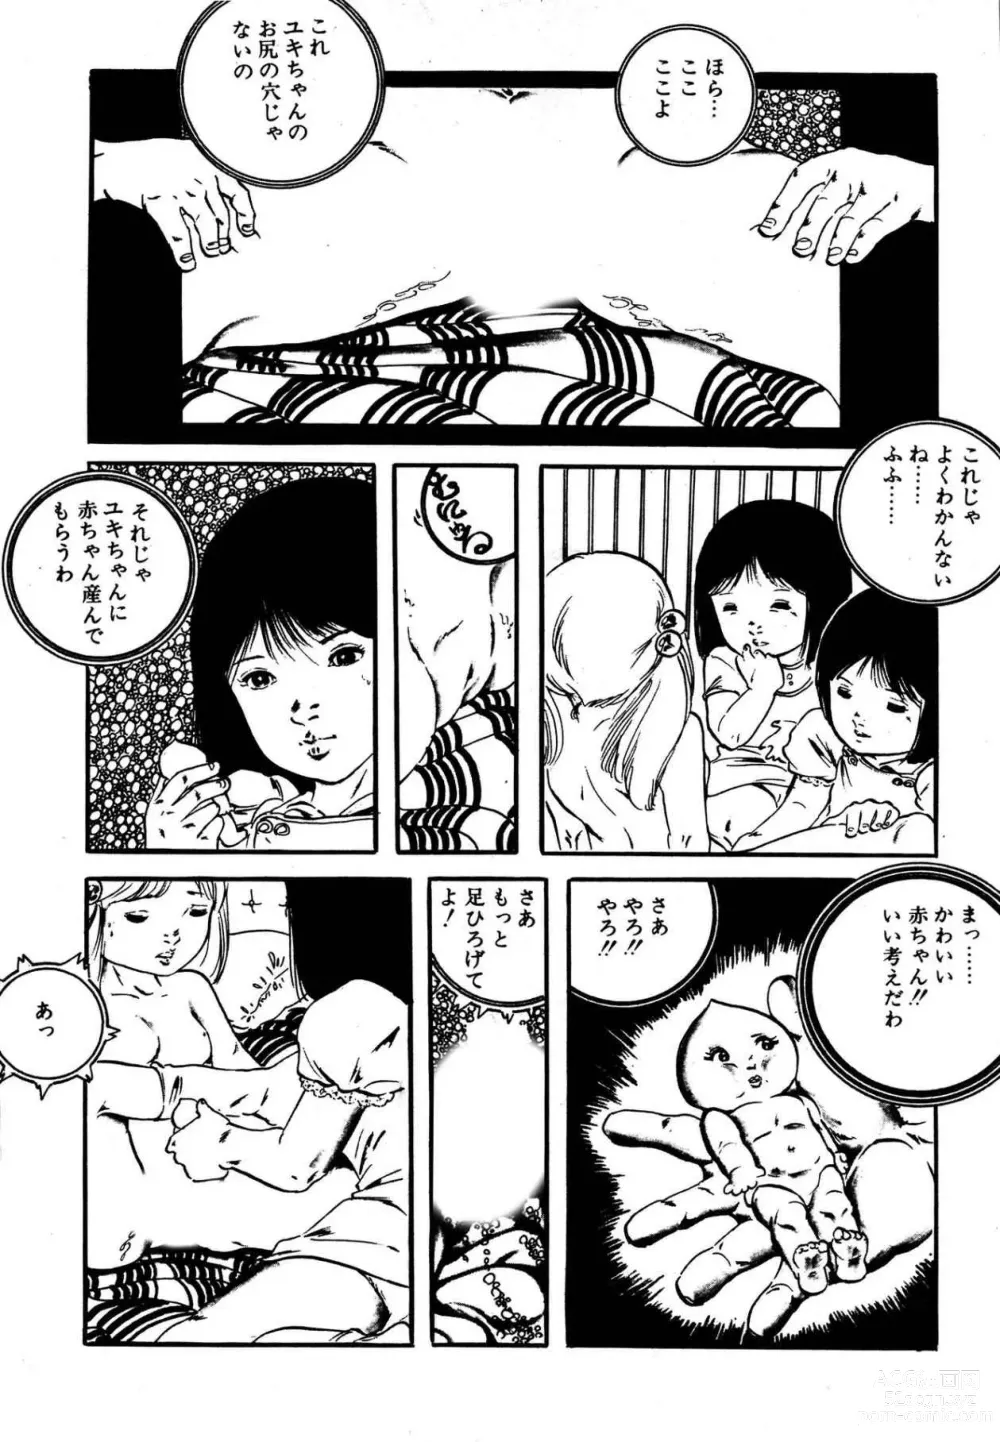 Page 189 of manga Dreaming fairy